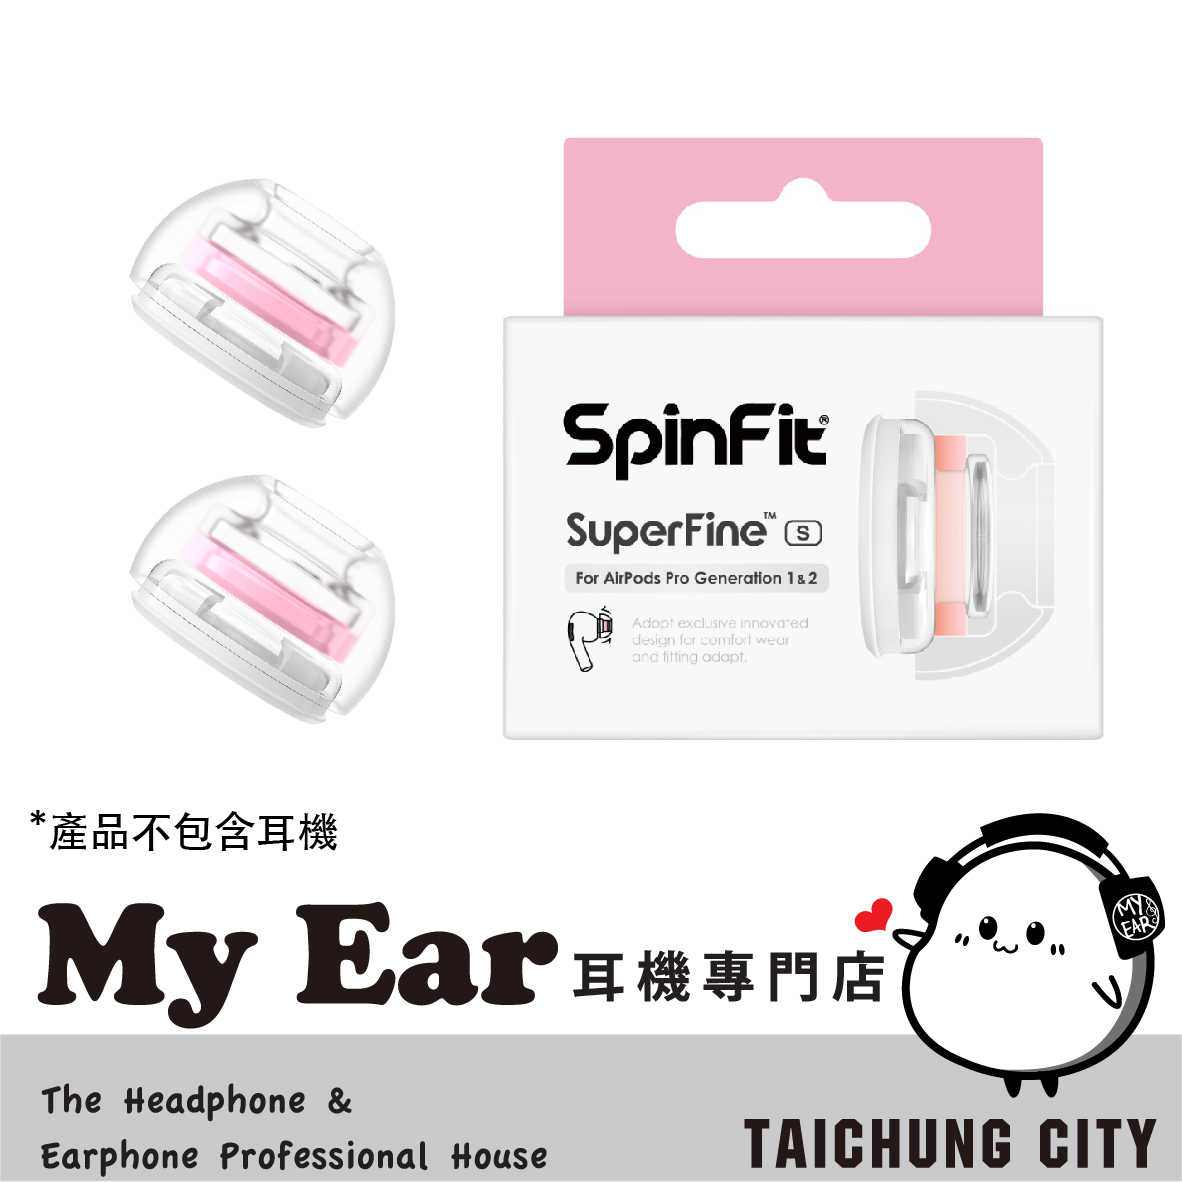 SpinFit SuperFine S 適用Airpods Pro CP1025 矽膠耳塞 | My Ear耳機專門店